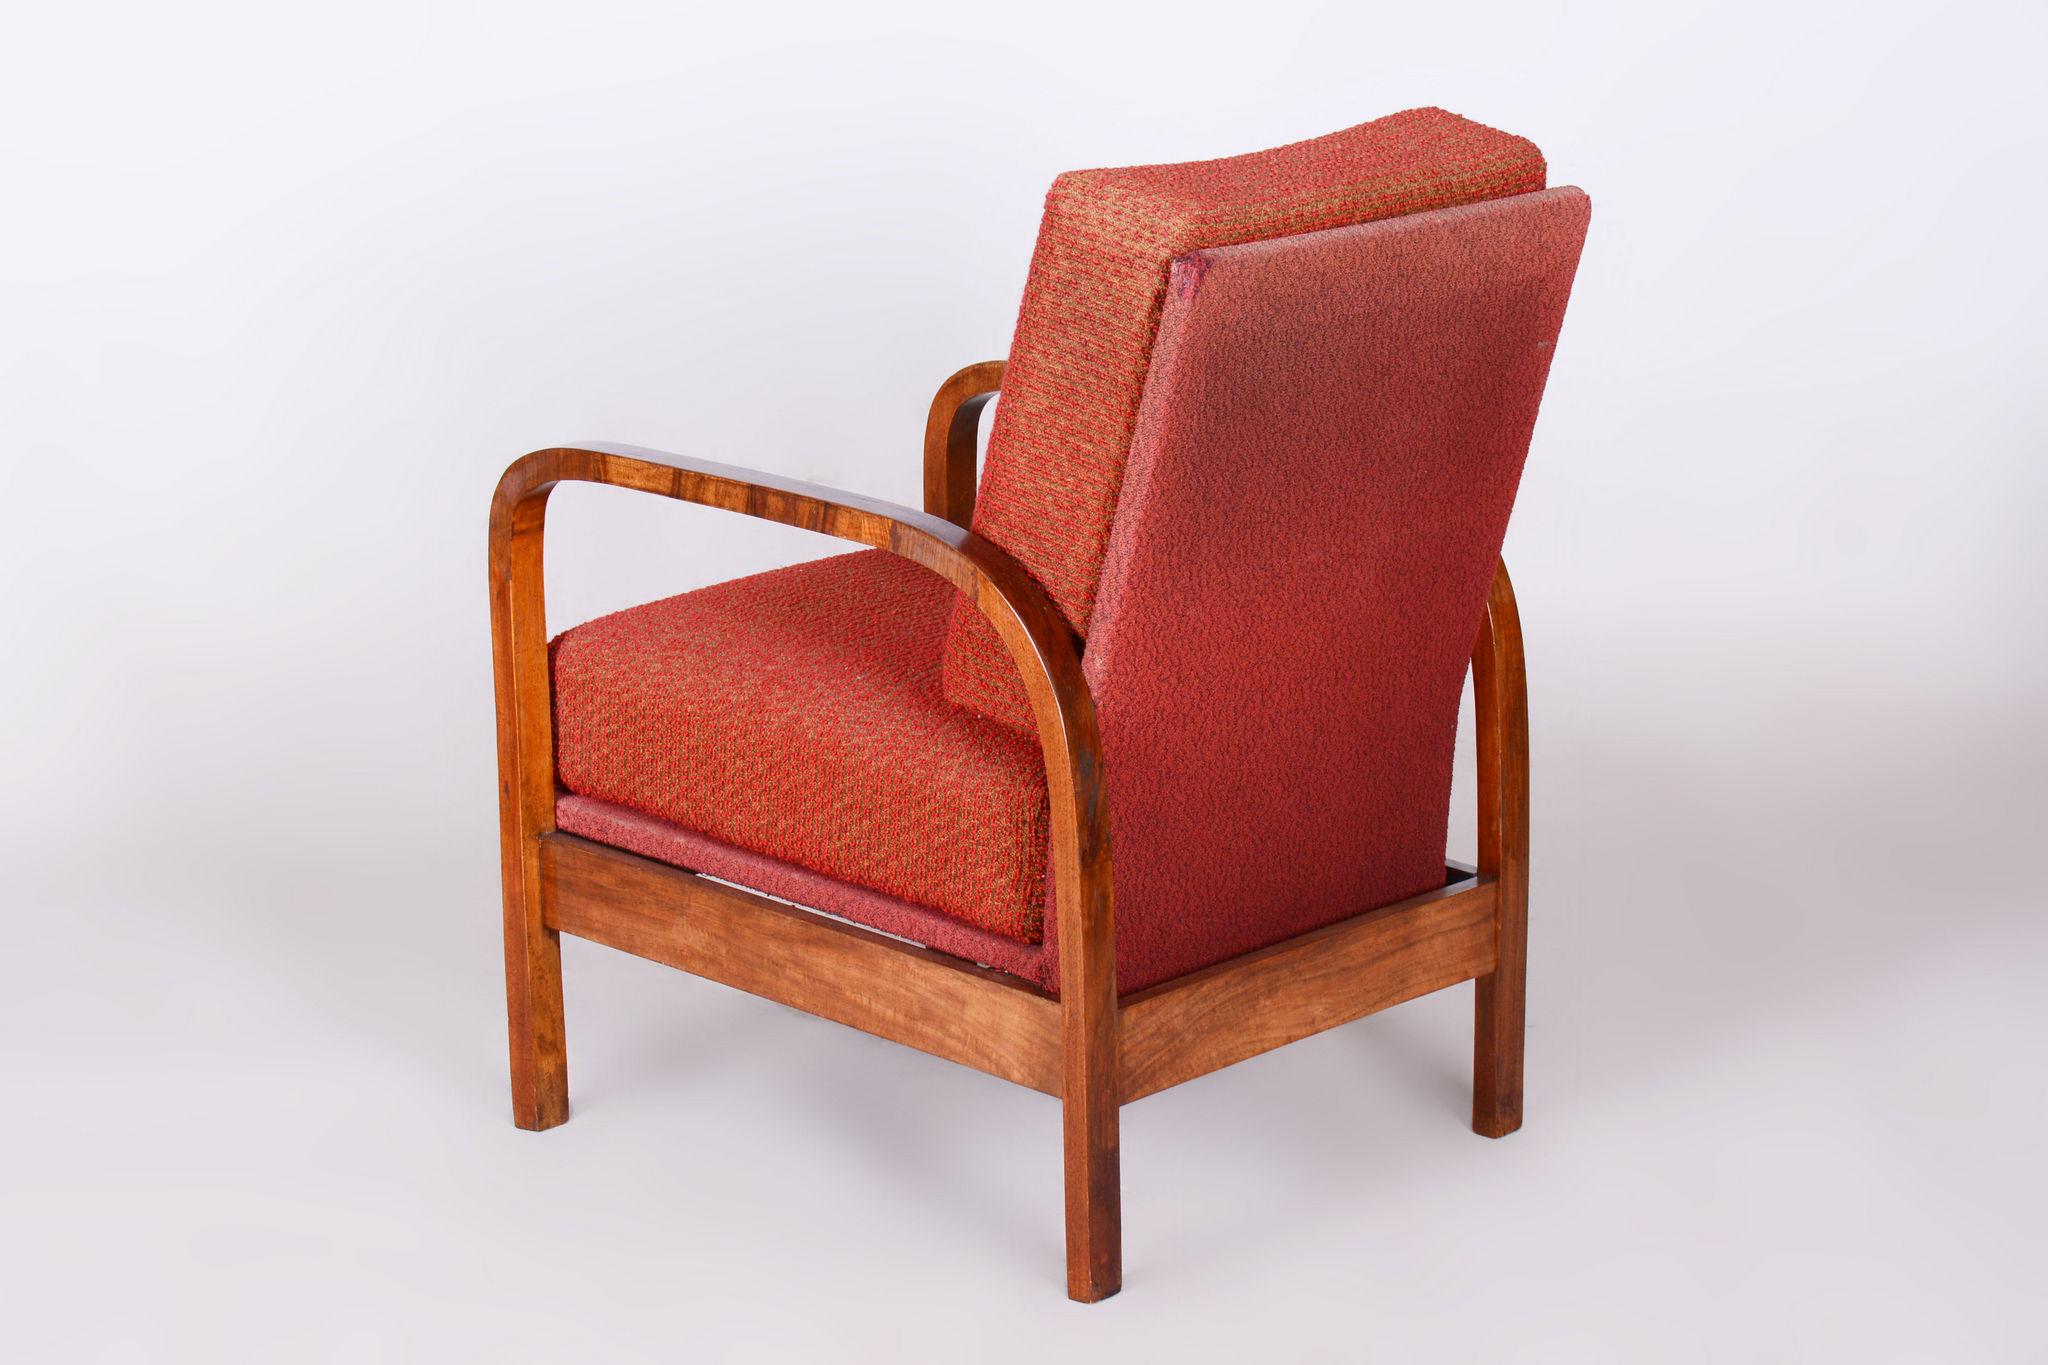 Restored Art Deco Armchair, Original Upholstery, Walnut, Veneer, Czech, 1930s For Sale 2